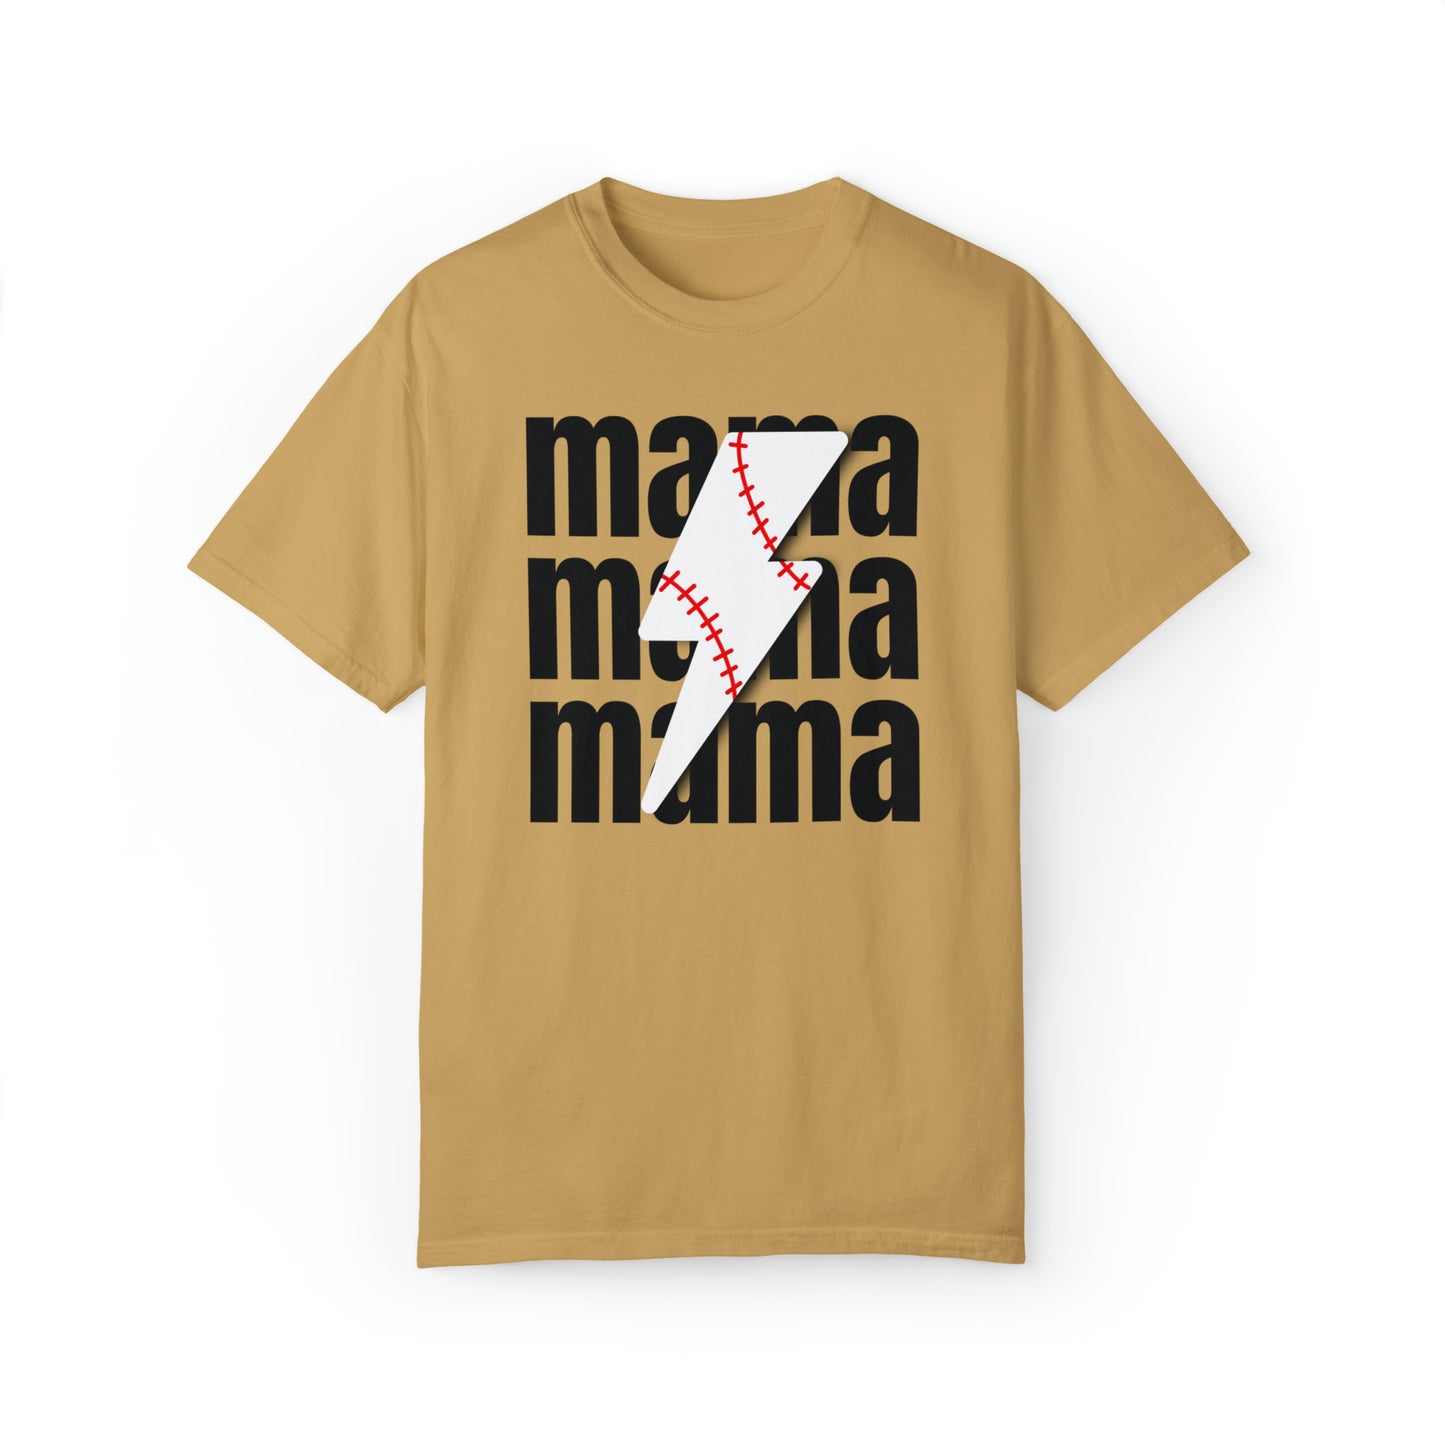 Baseball Mom Shirt, Trendy Mom Sports Game Day Shirt, Baseball World Series Shirt, Baseball Jersey, Mom Gift, Coach Gifts, Cute Mom Shirts